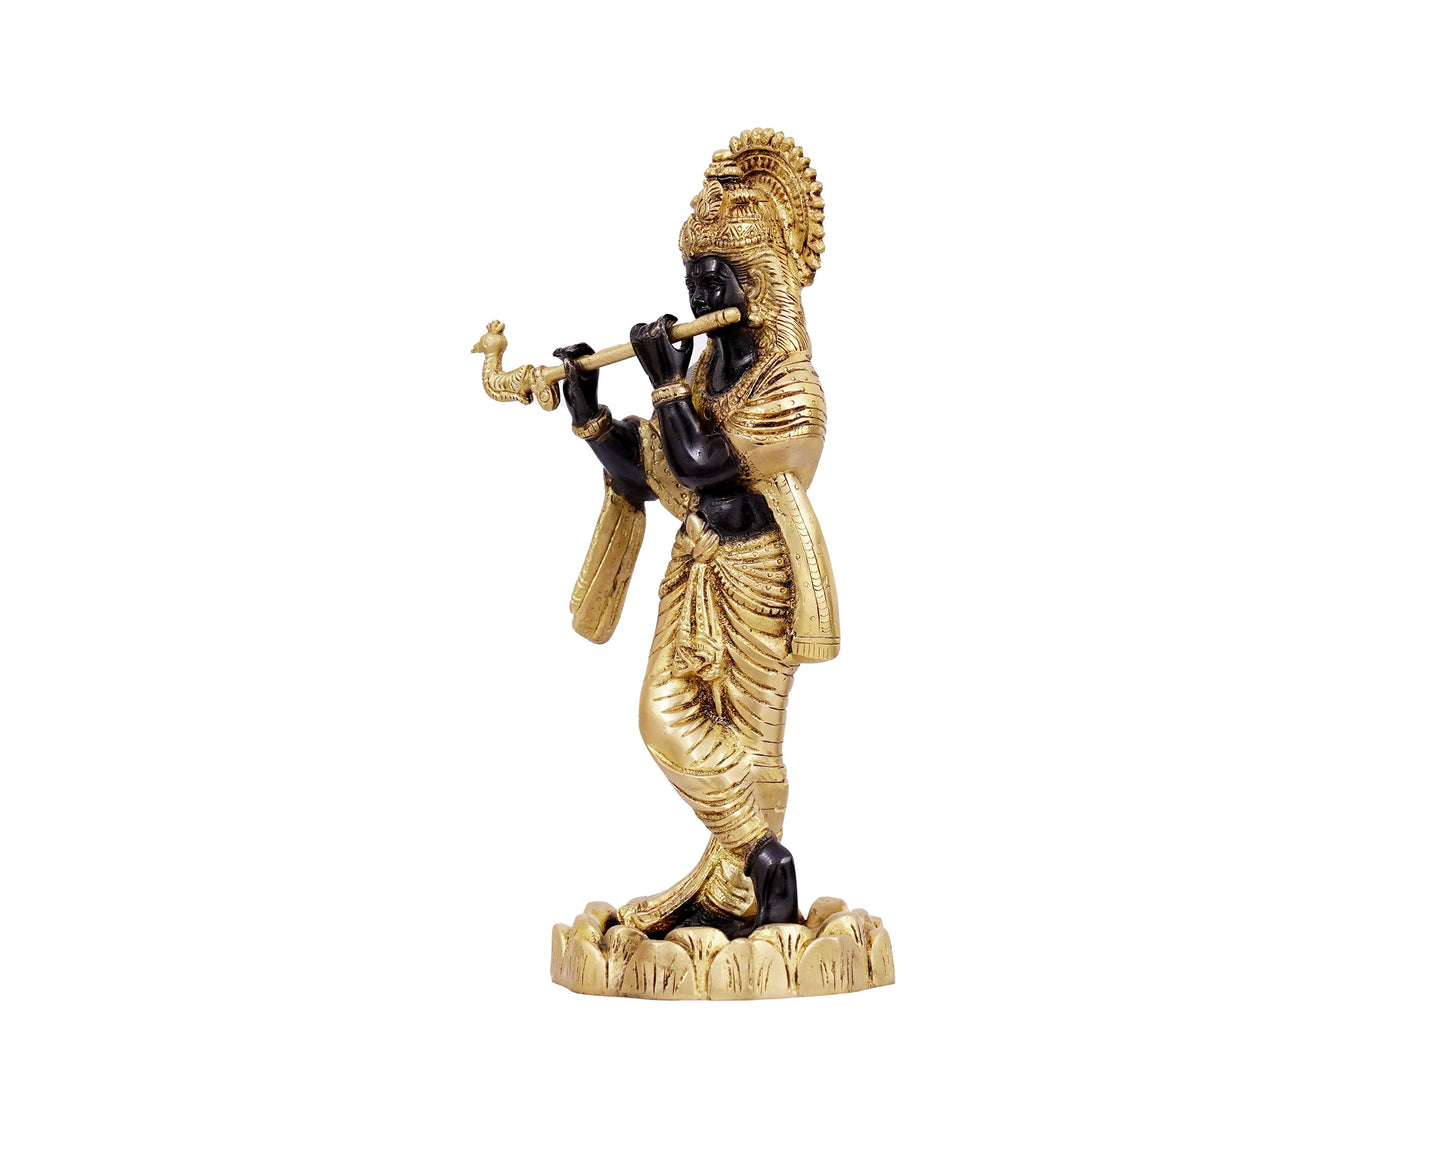 Shri Krishna Brass Statue for Puja, Home Mandirs, Gifts by Pooja Bazar 4.5 X 4.5 X 11 In